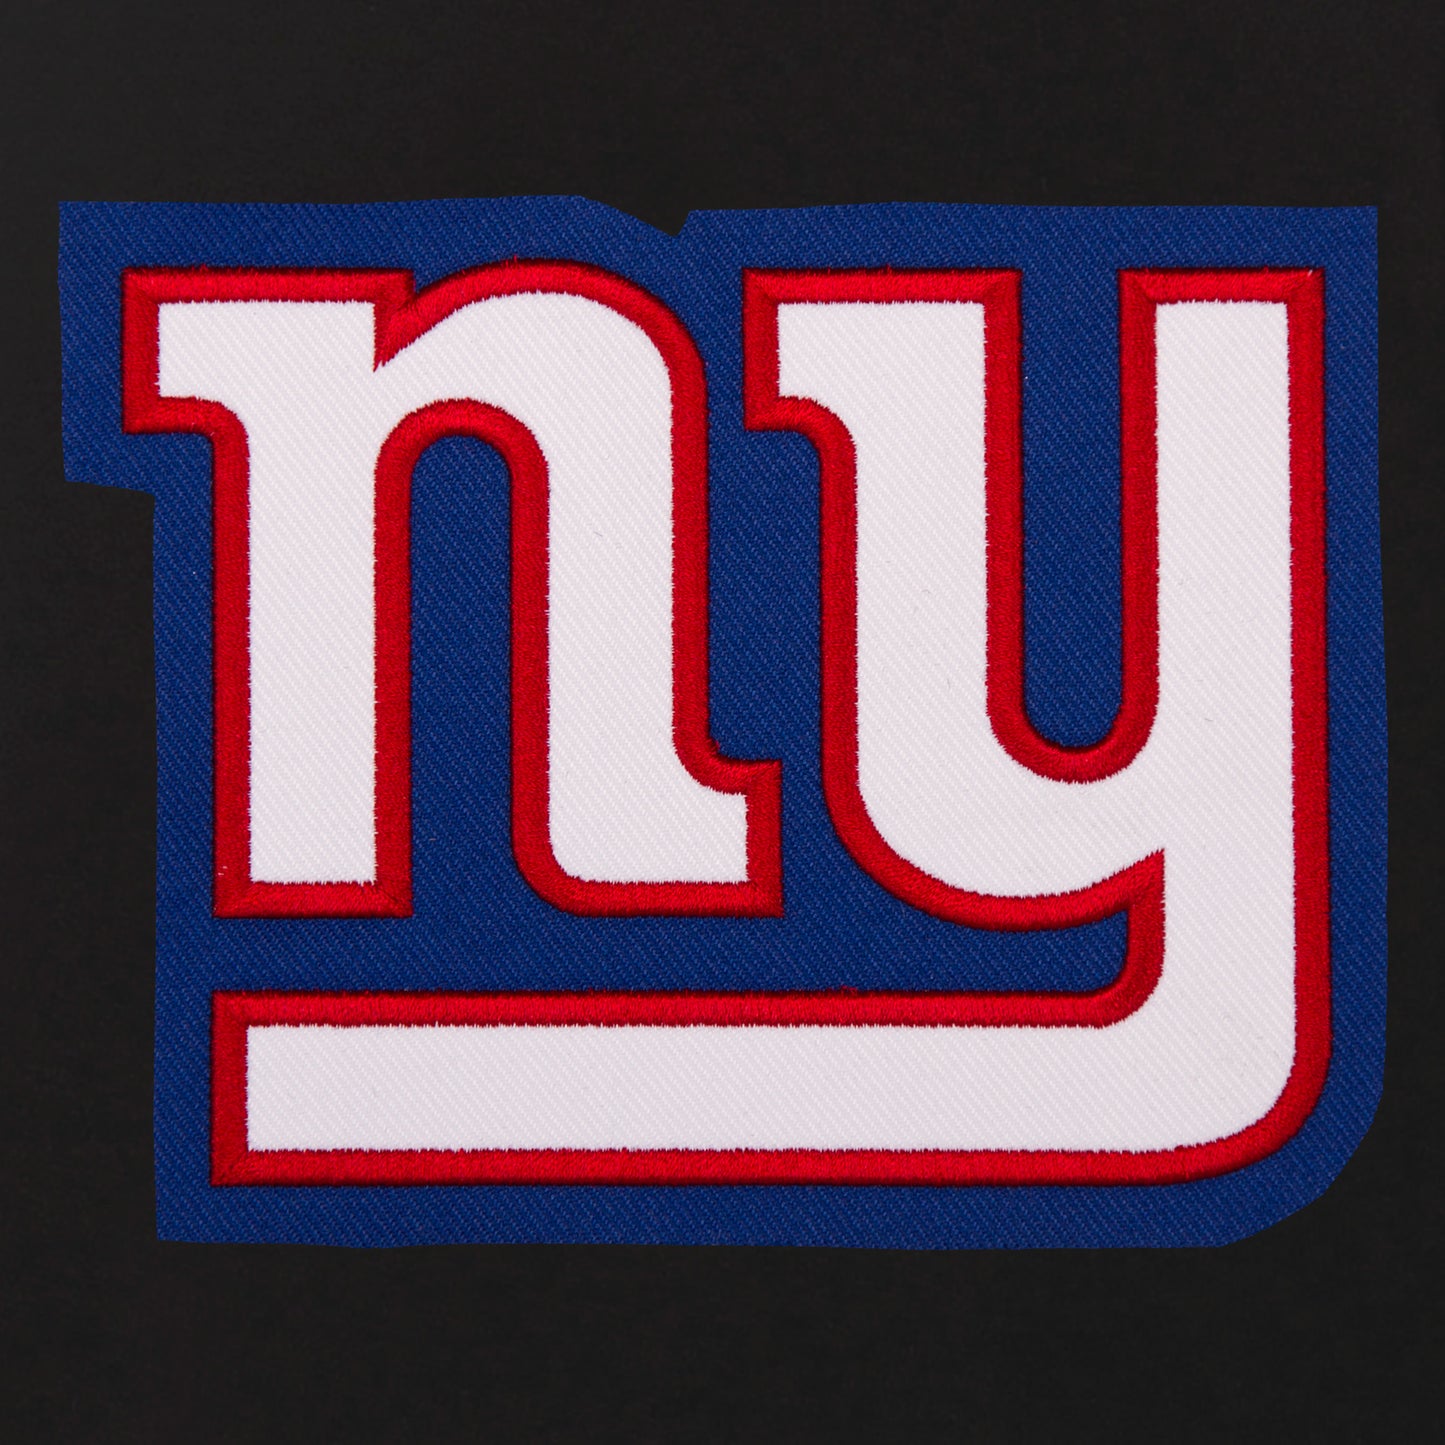 New York Giants Ladies Reversible Fleece Jacket